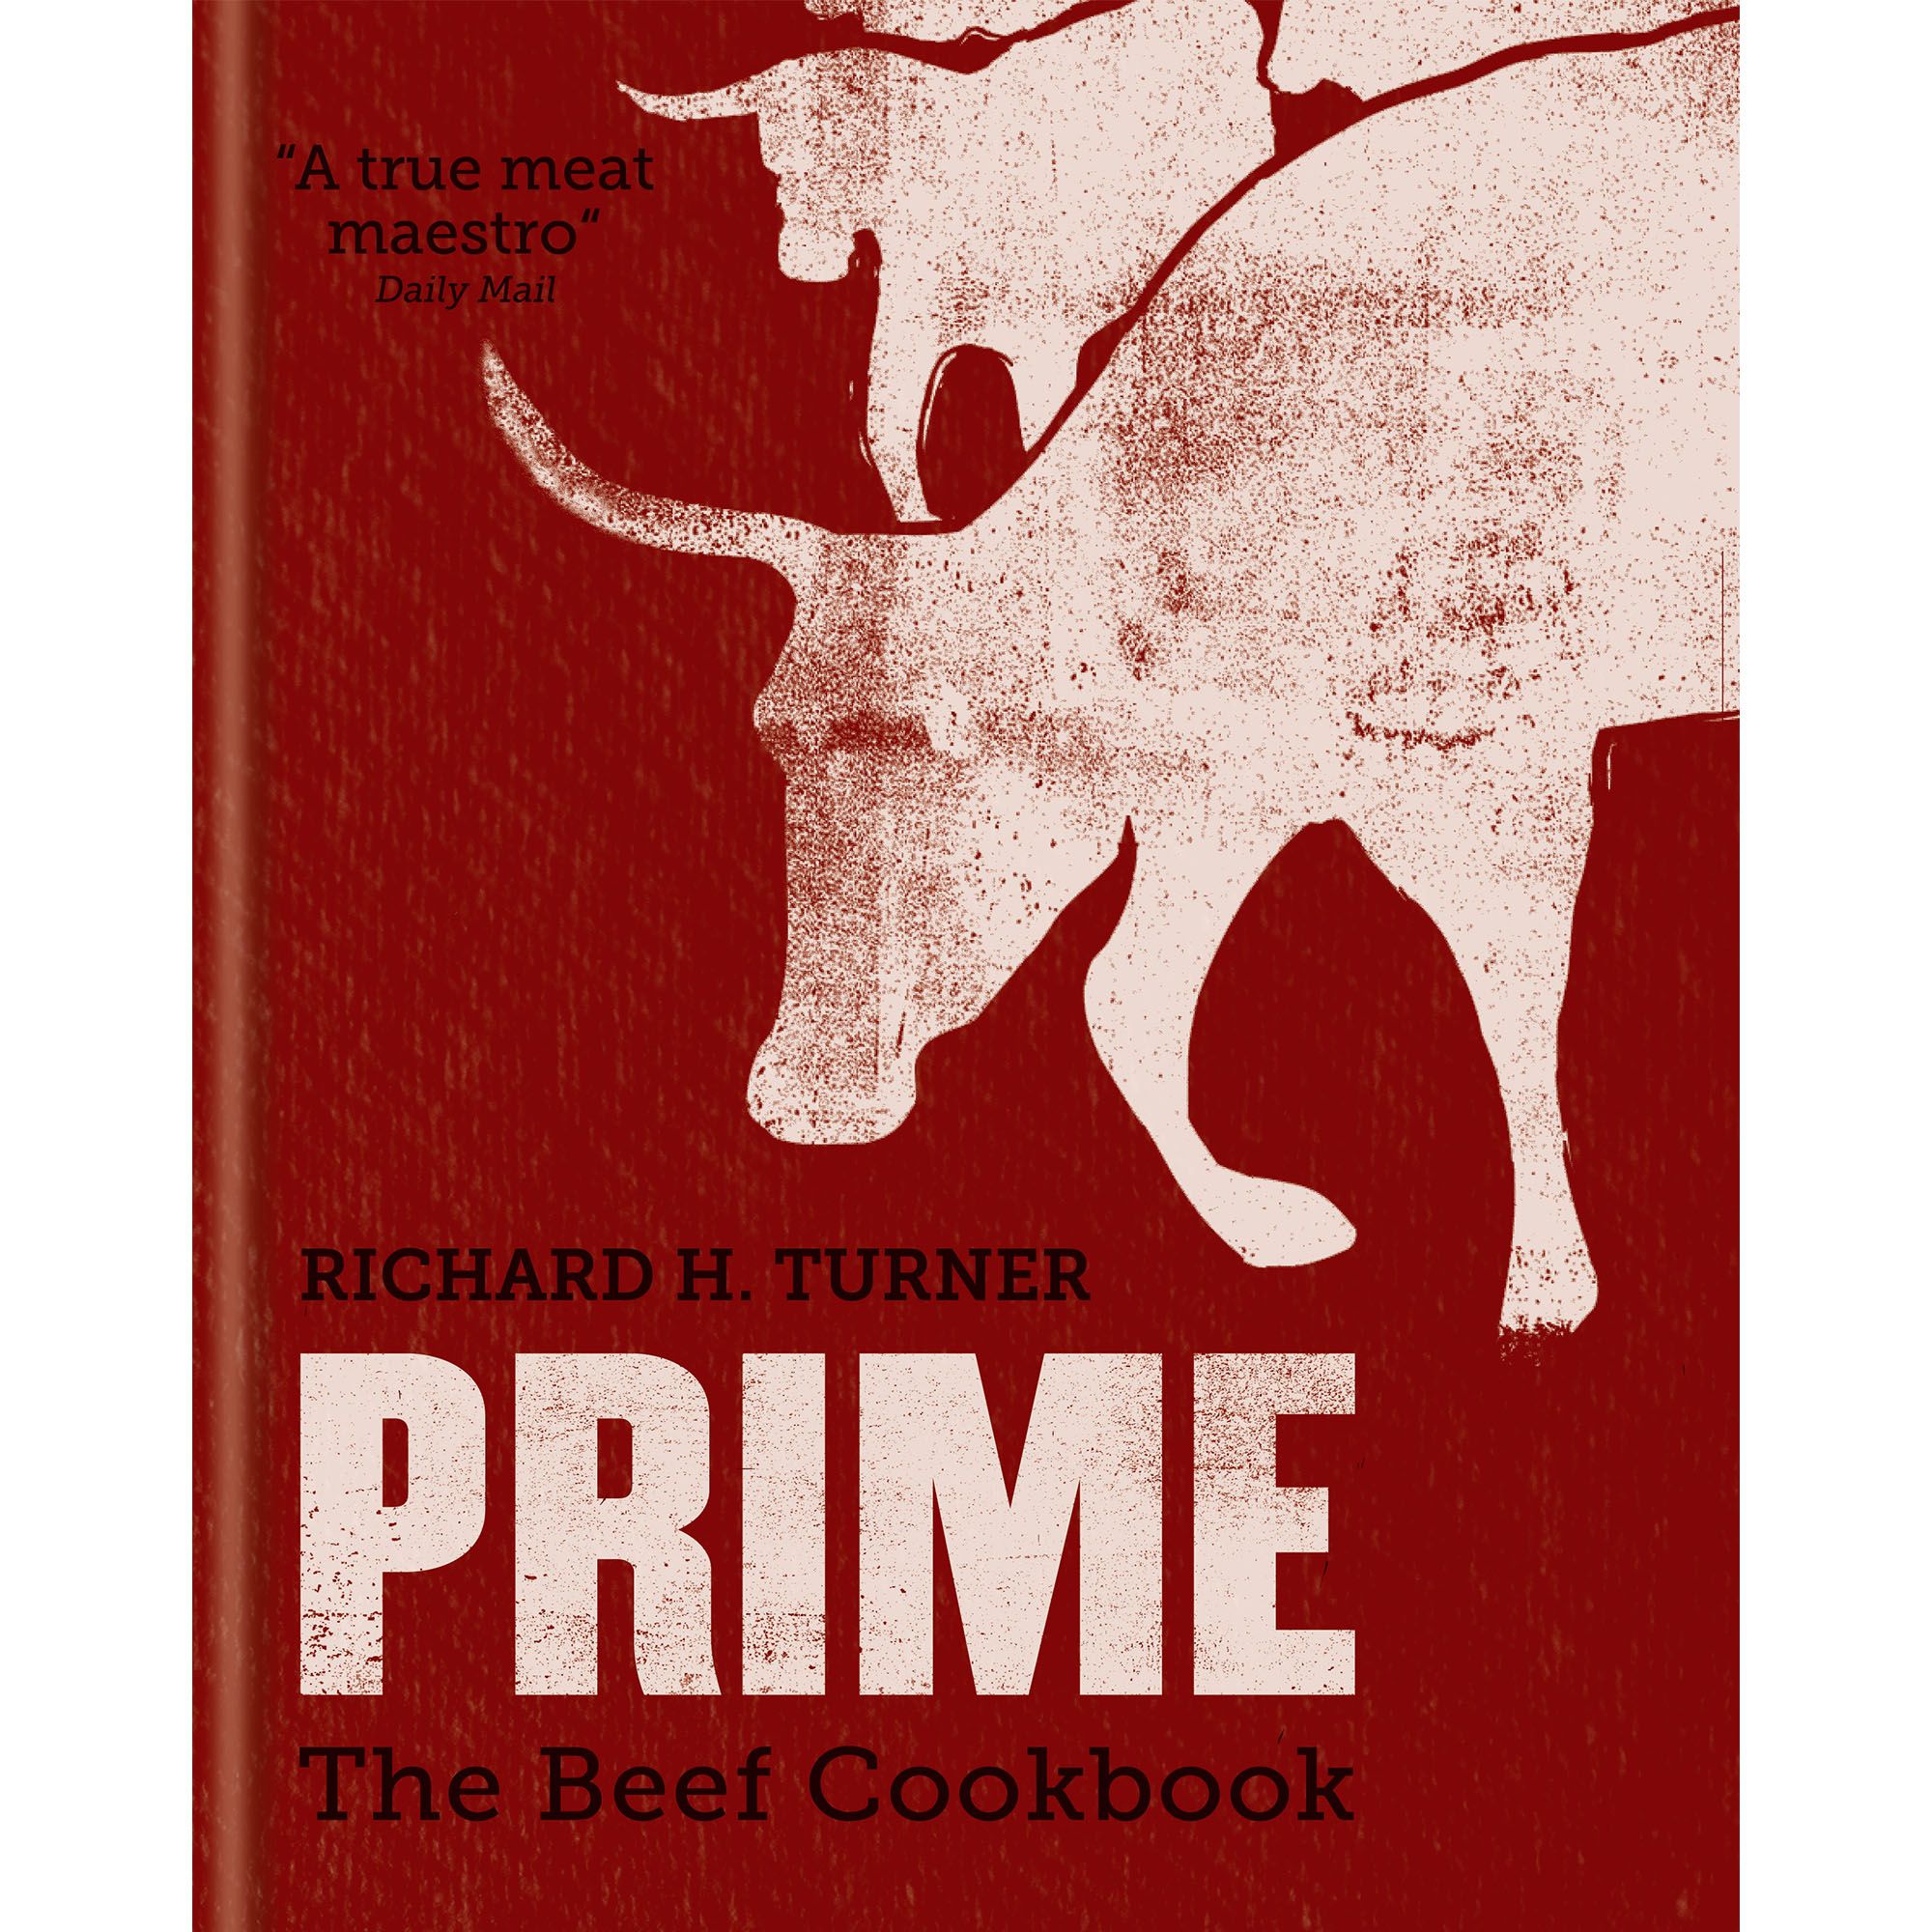 Richard Prime. True meat